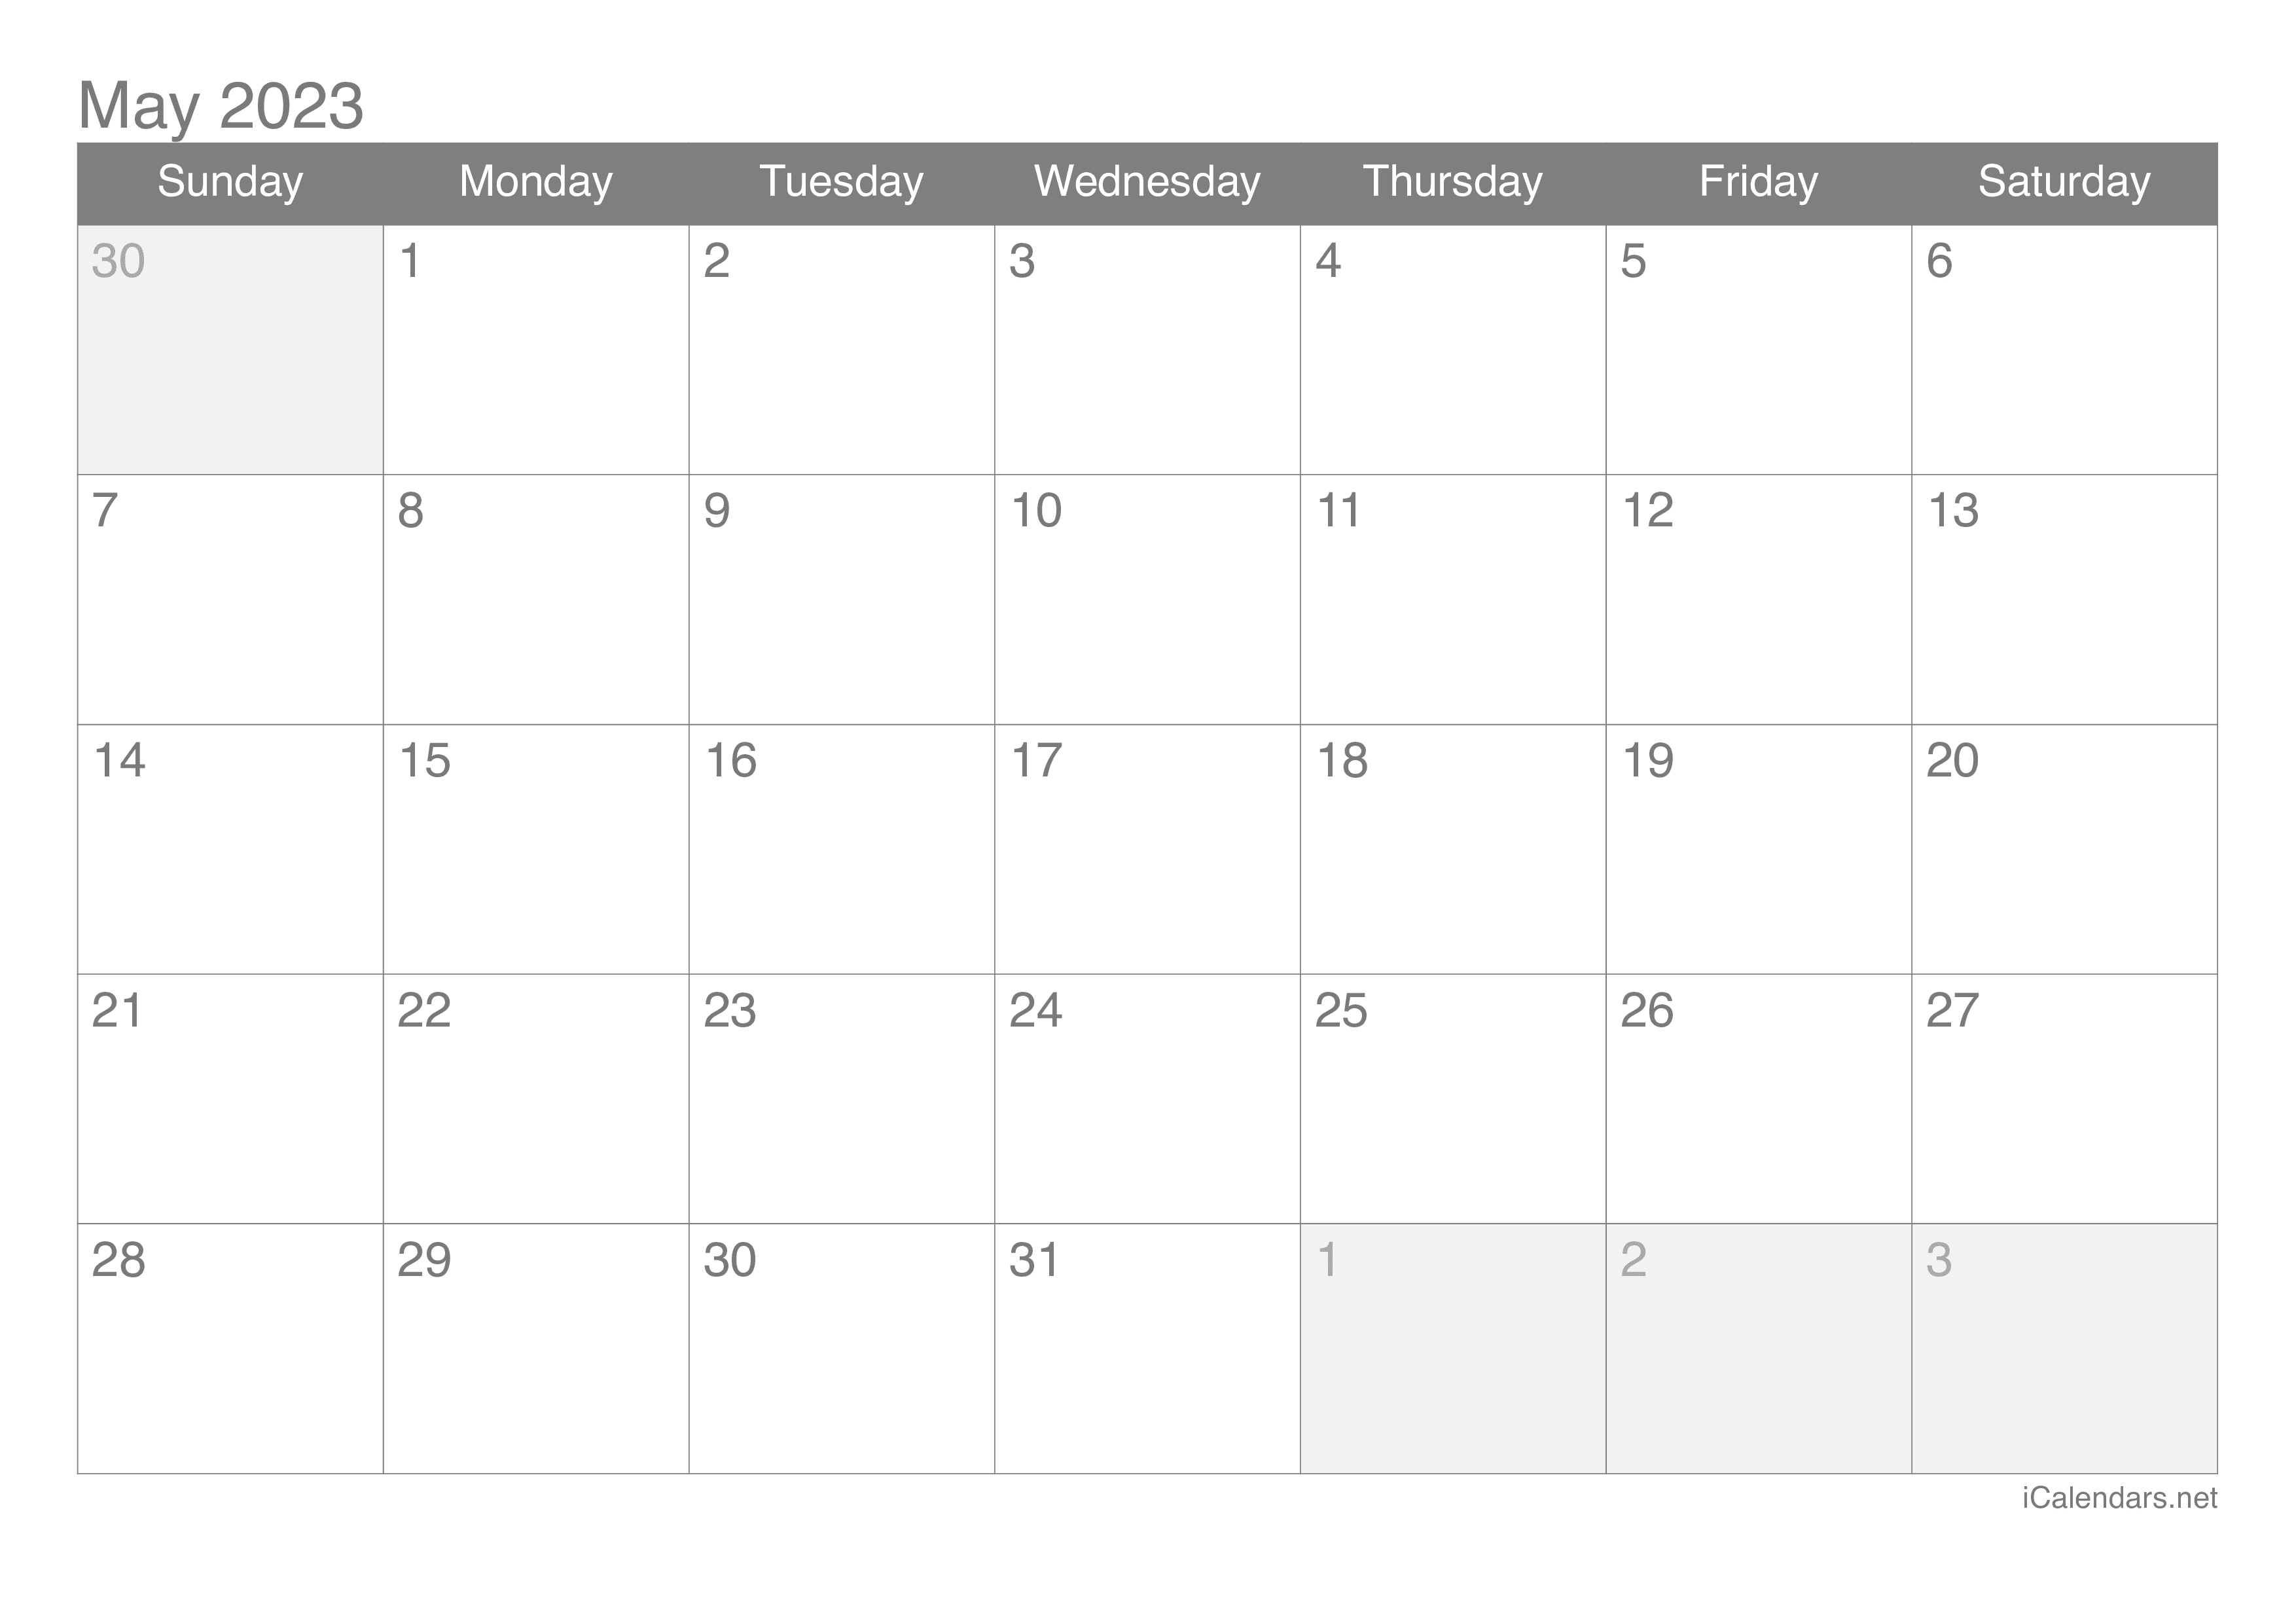 may 2023 printable calendar icalendars net